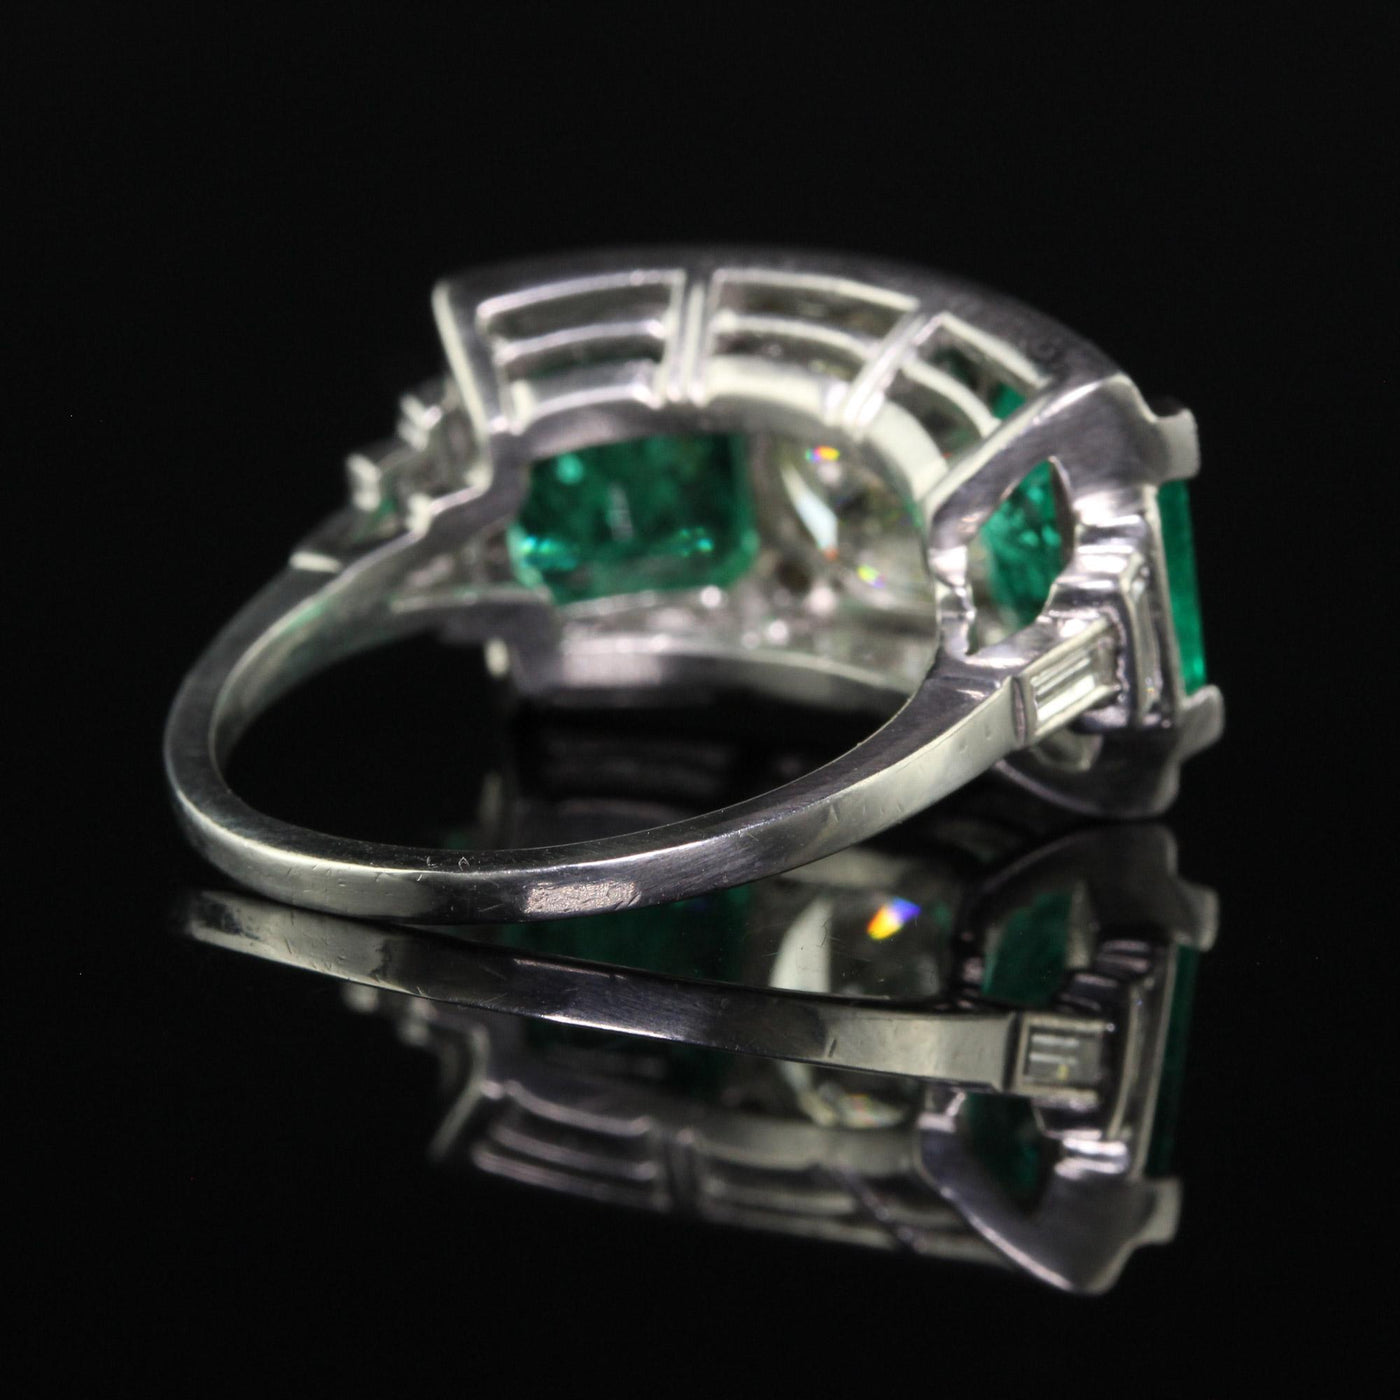 Vintage Retro Platinum Old Cut Diamond and Emerald Three Stone Ring - GIA/AGL